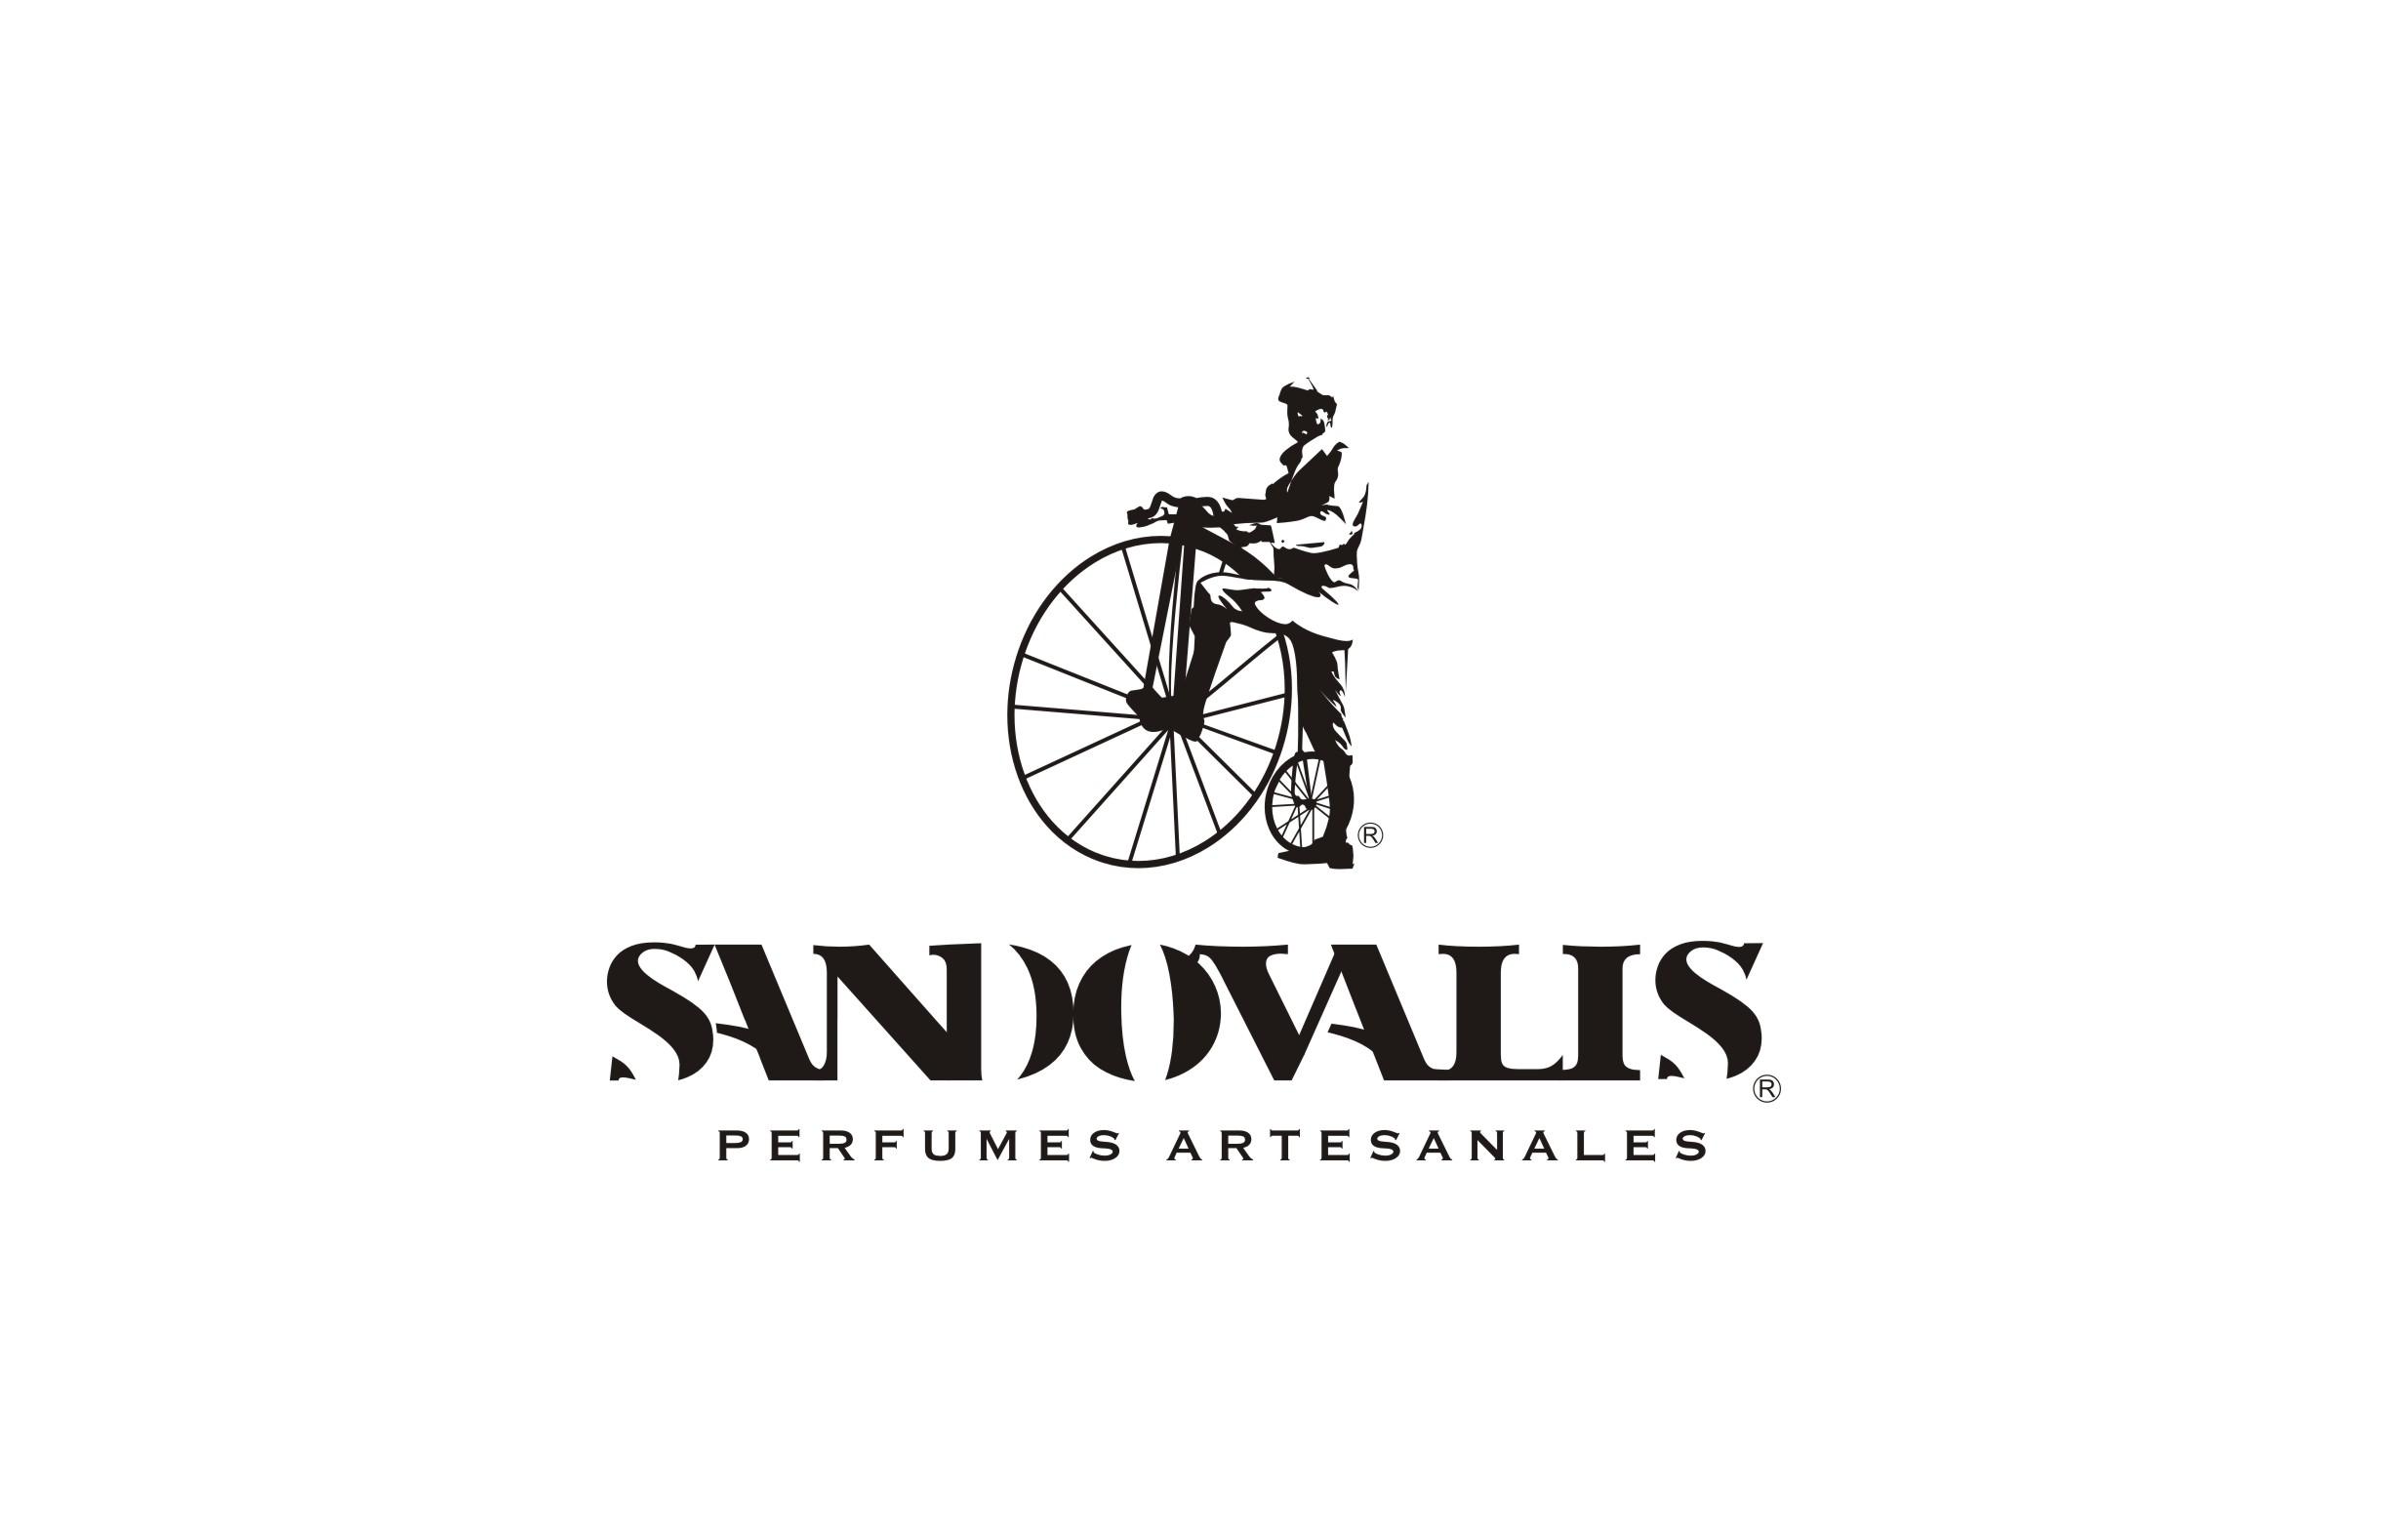 Sandovalis perfumes and colognes